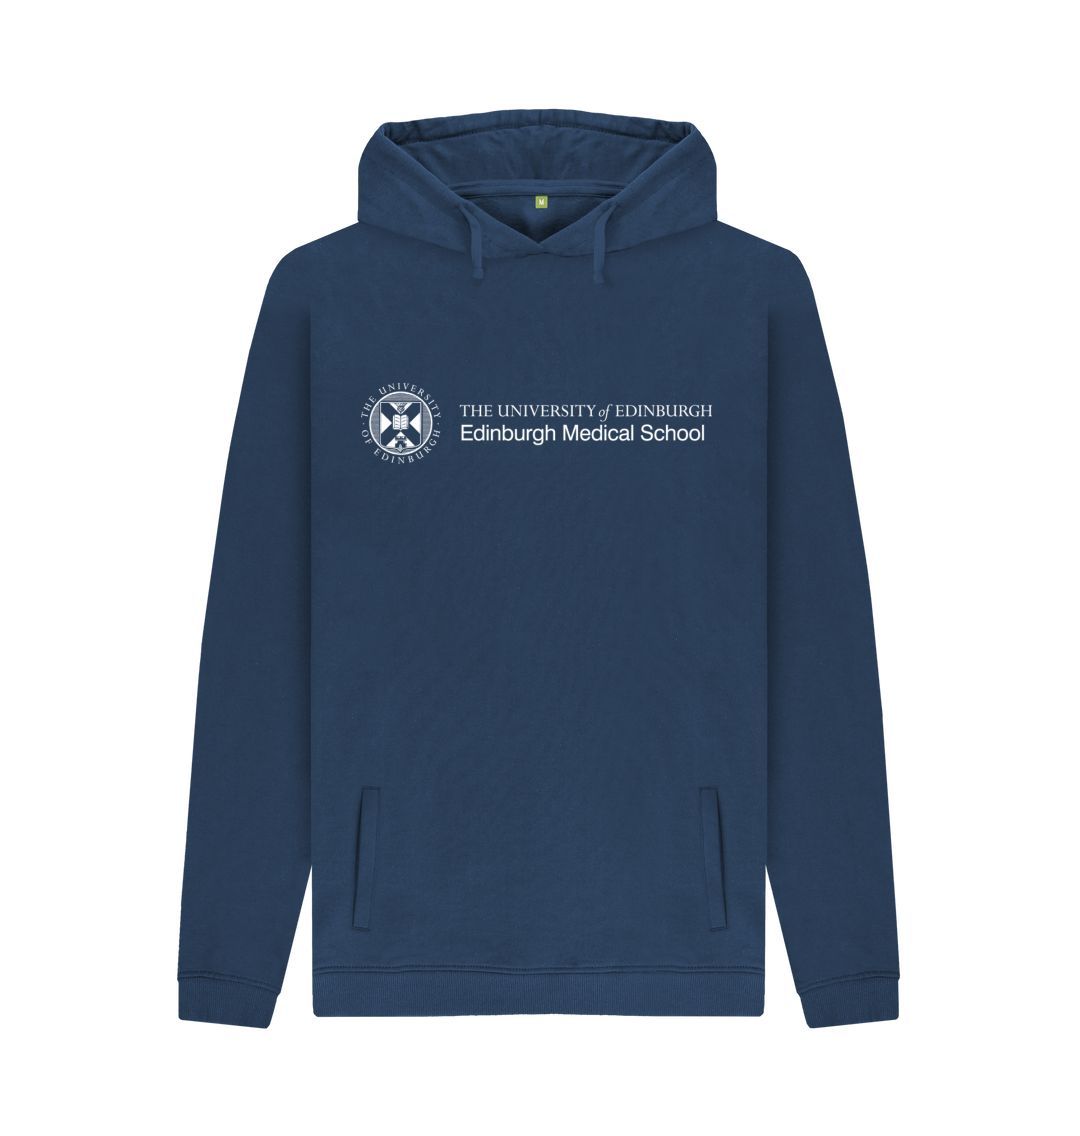 Navy Hoodie with white University crest and text that reads ' University of Edinburgh : Edinburgh Medical School'